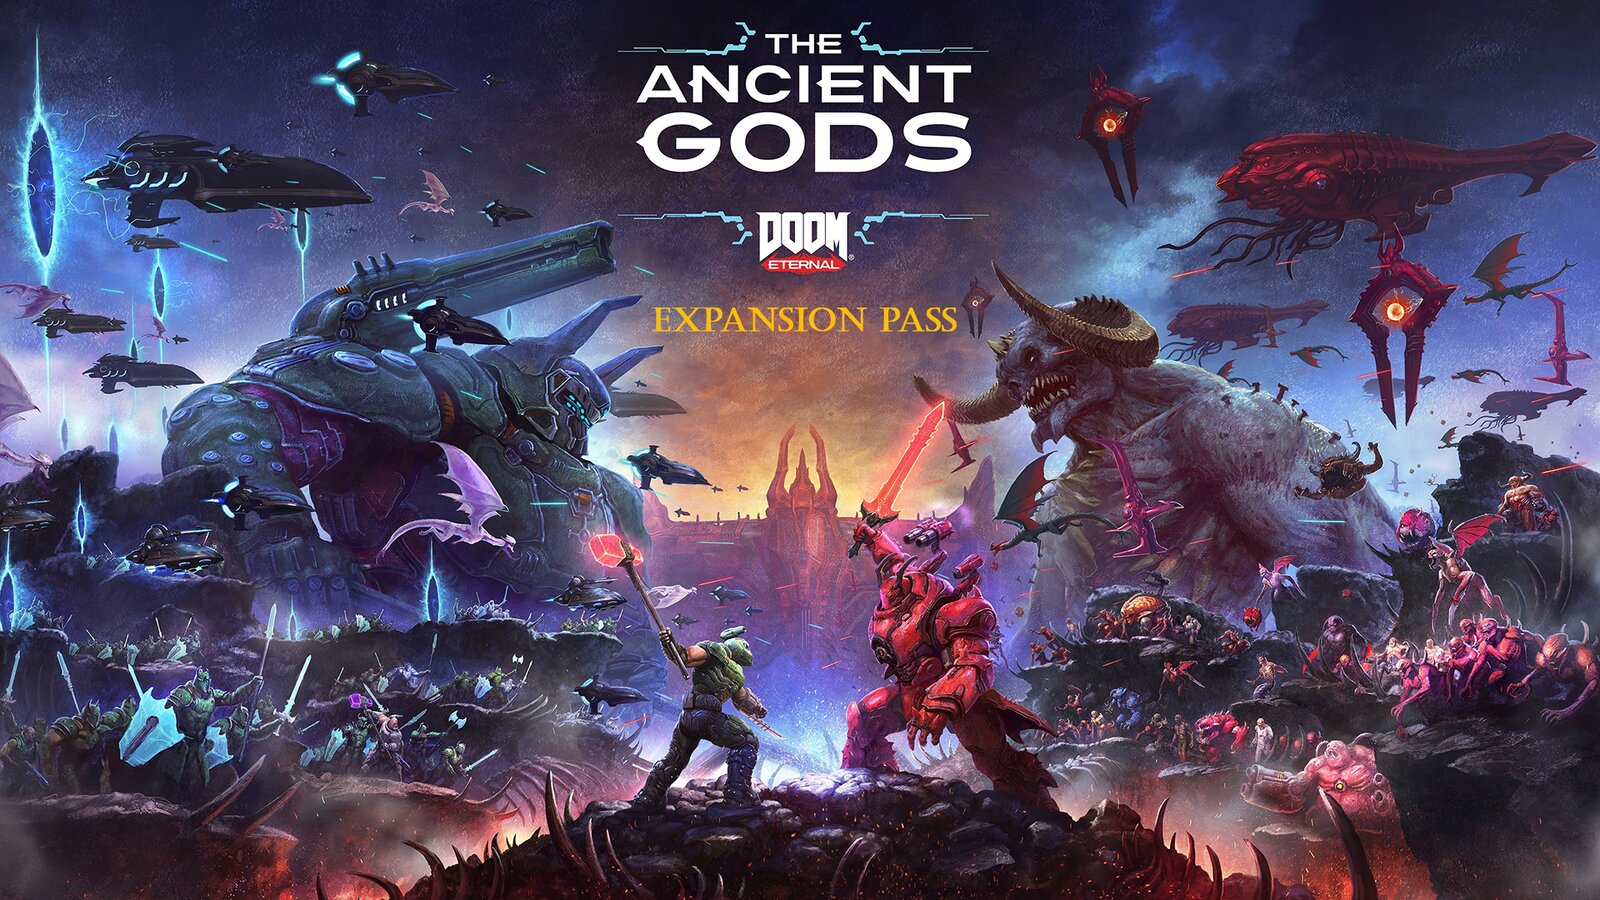 DOOM Eternal: The Ancient Gods - Expansion Pass